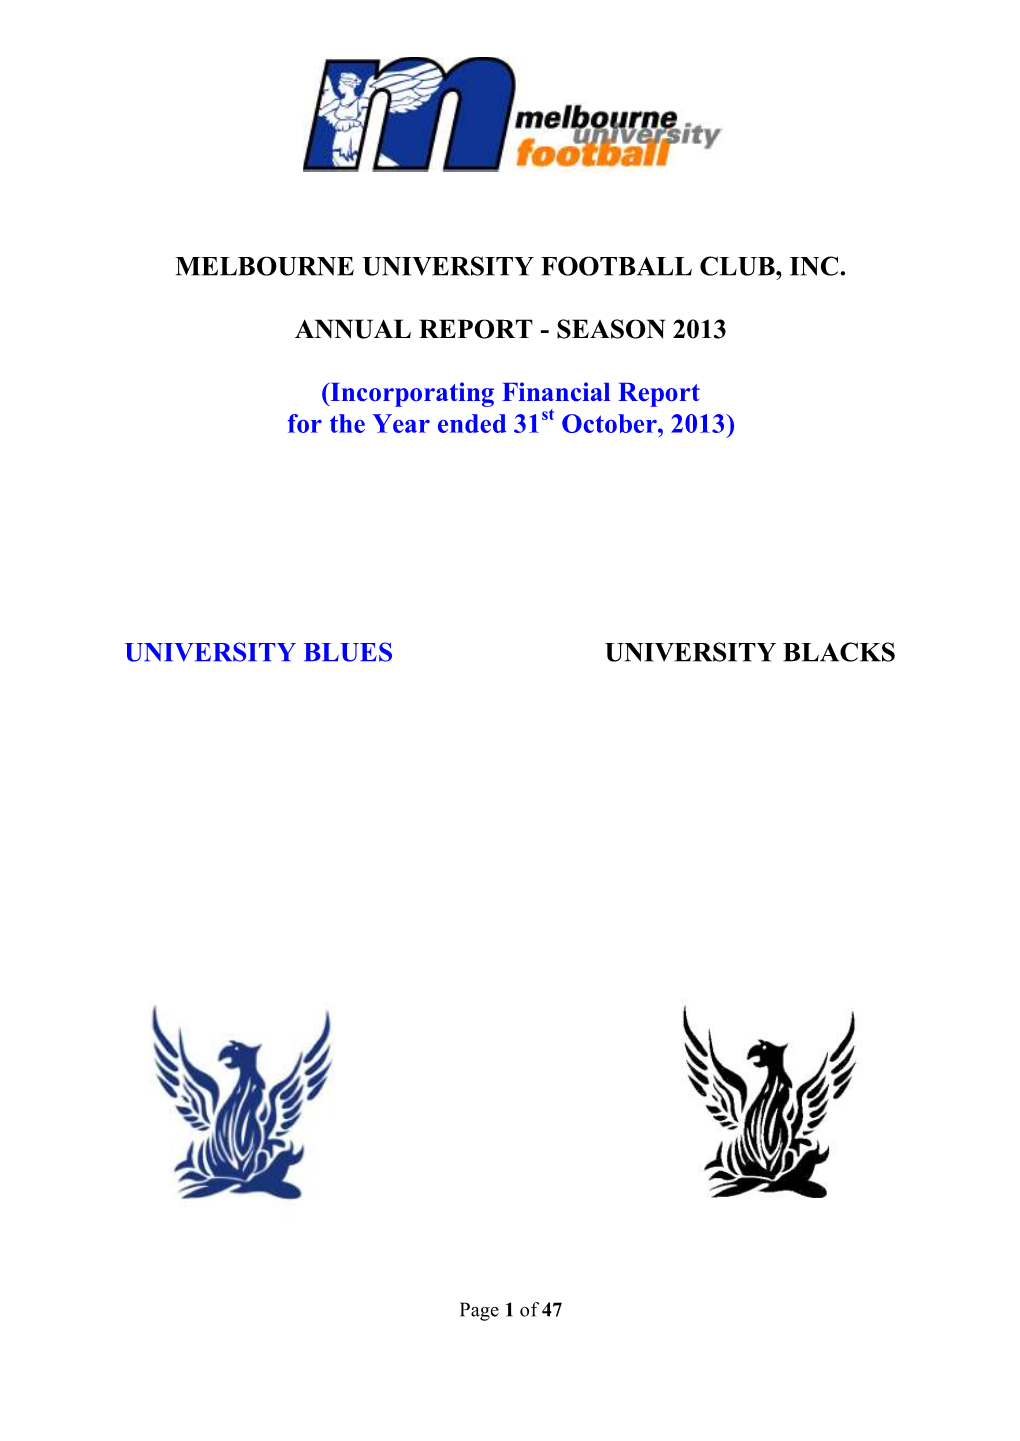 Melbourne University Football Club, Inc. Annual